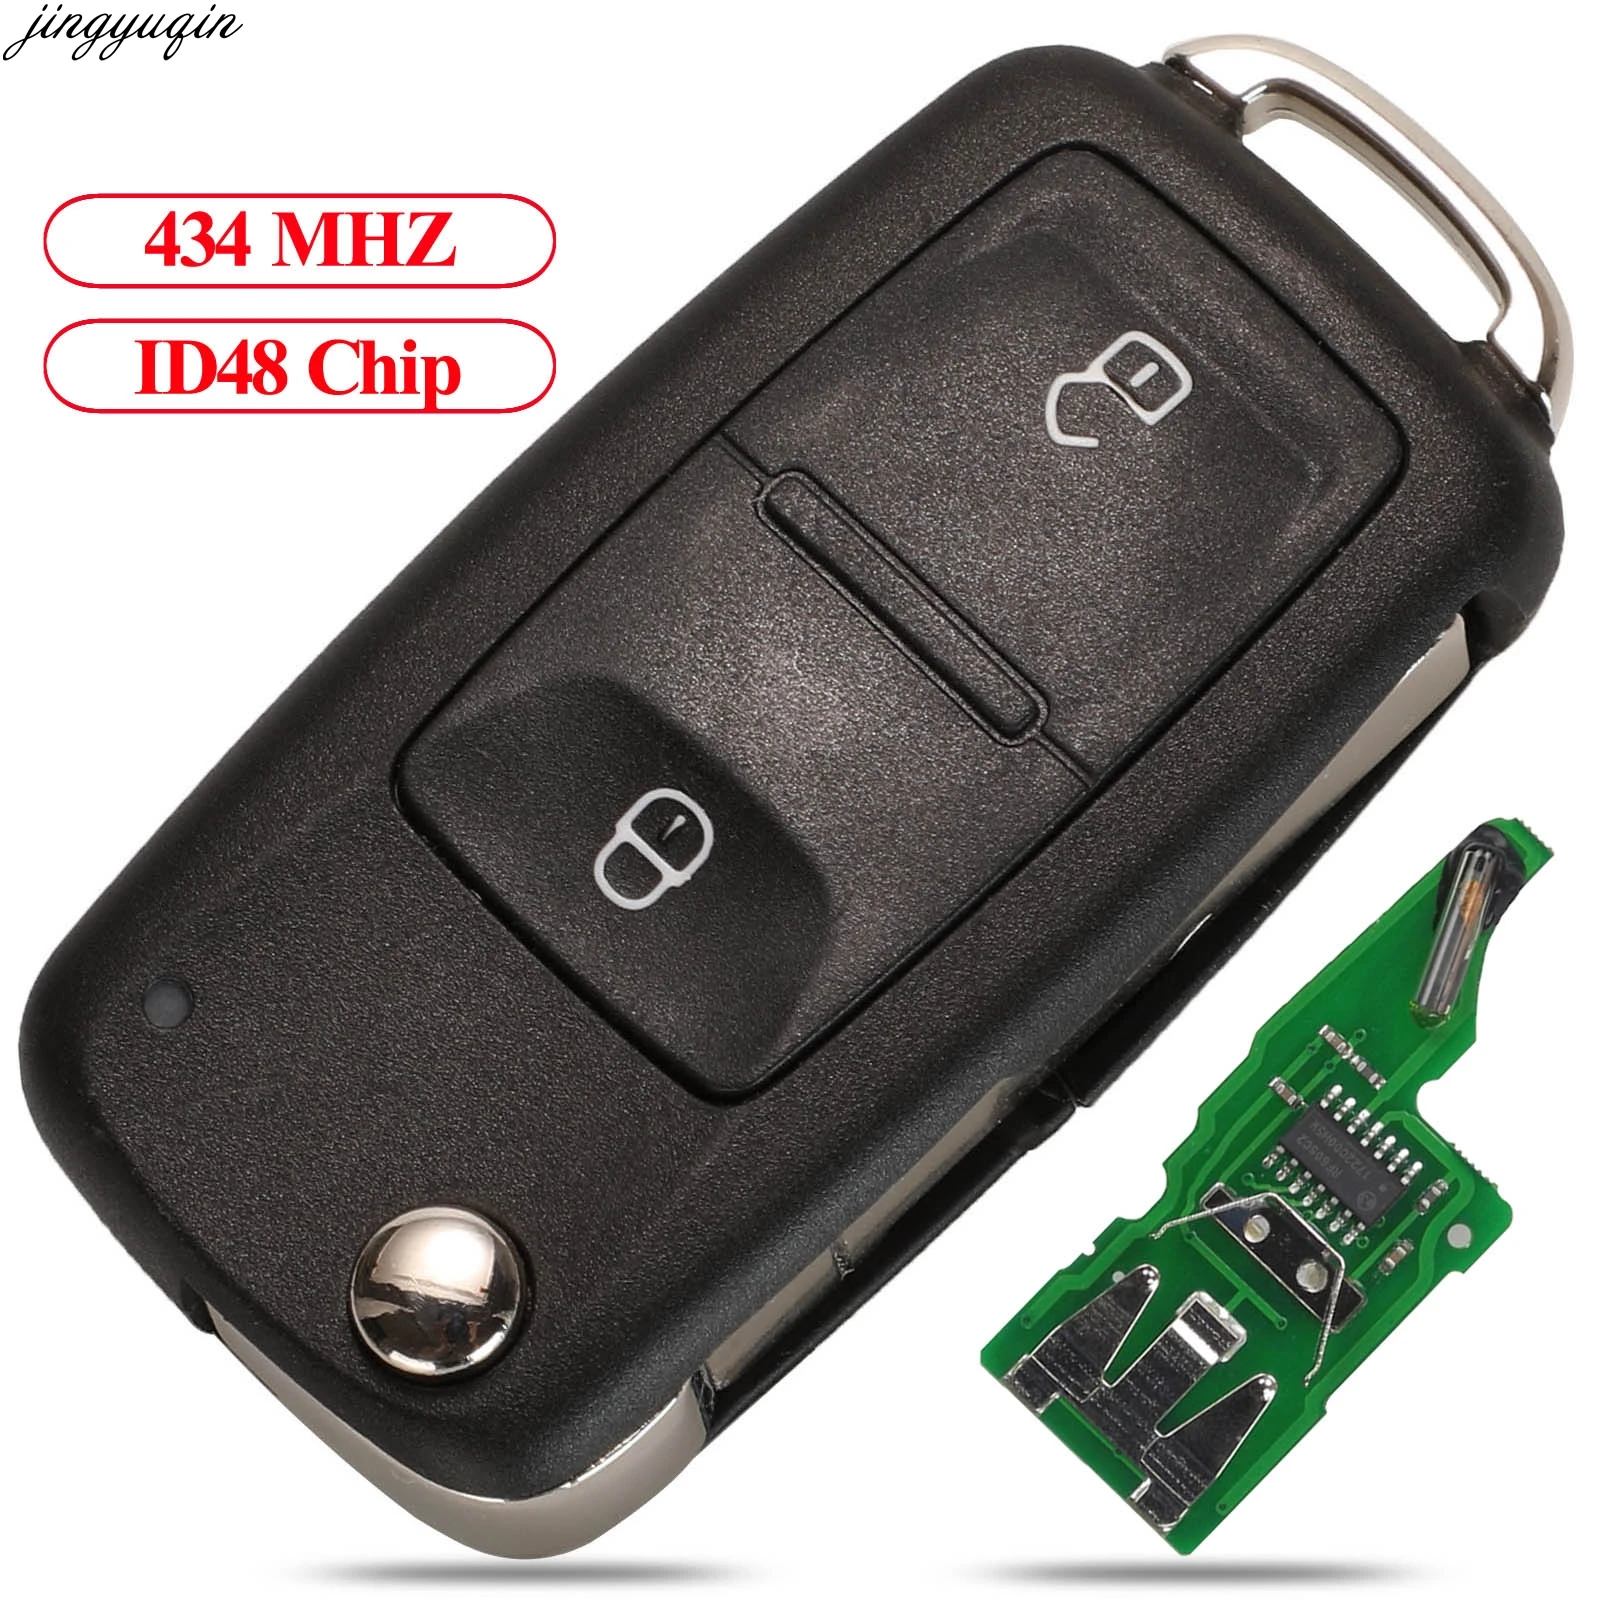 Jingyuqin Remote Car Flip Key 434MHz ID48 Chip For VOLKSWAGEN VW Amarok Transporter 2011-2016 5K0959753AB 2 Buttons 4d0837231a 433mhz id48 chip 3 buttons remote control old model folding car key for audi a3 a4 a6 a8 b5 tt rs4